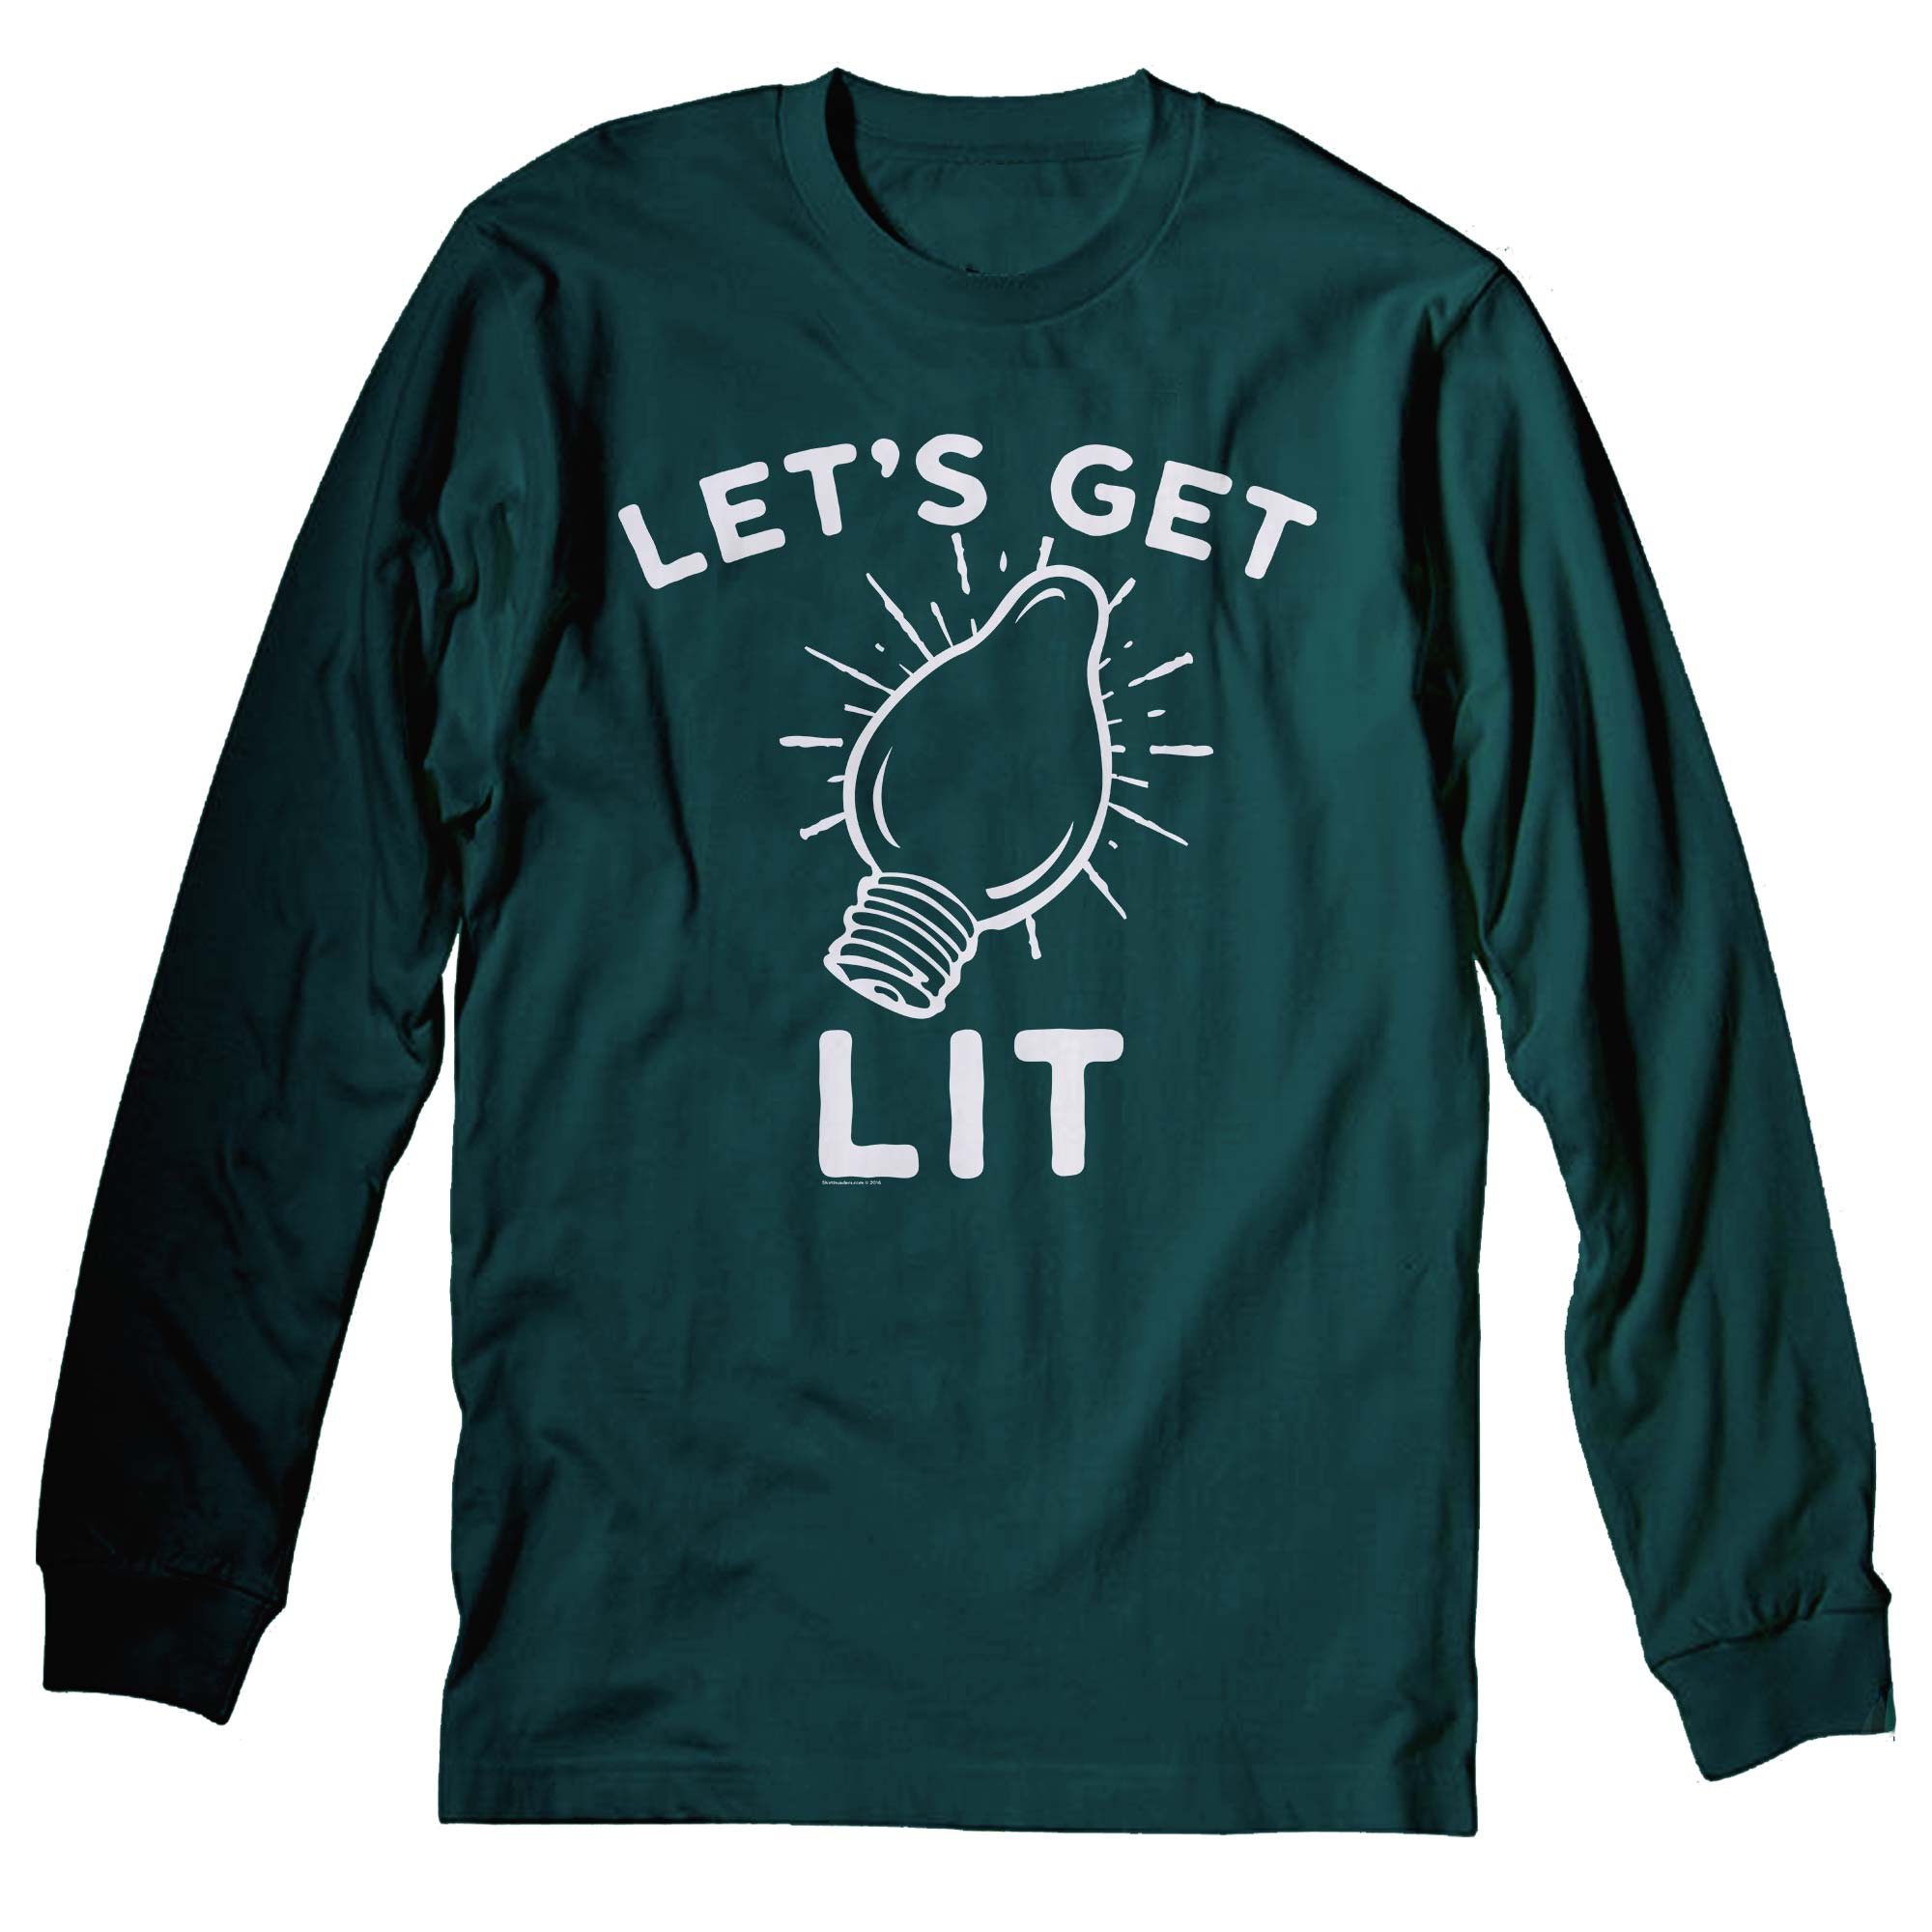 Get Lit - Christmas Long Sleeve Shirt